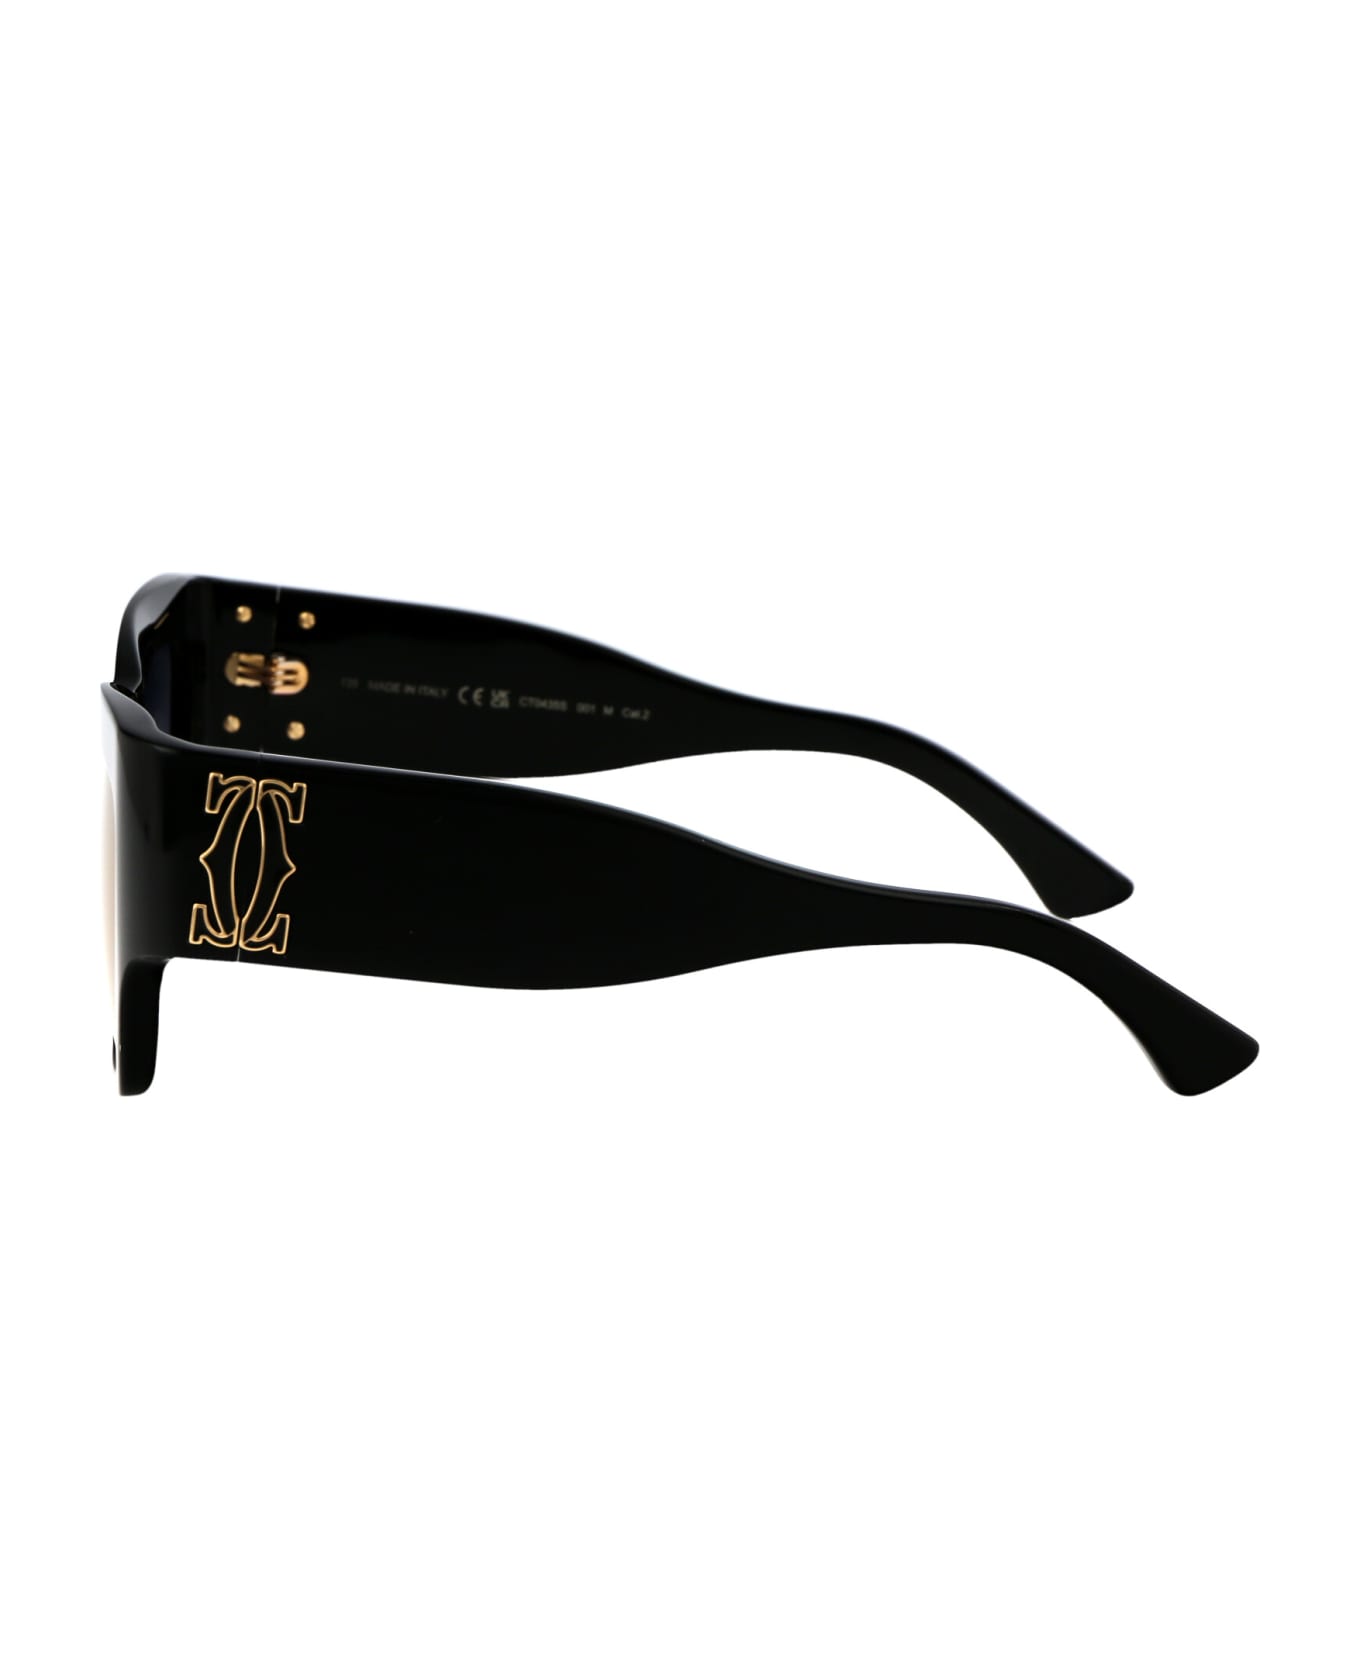 Cartier Eyewear Ct0435s Sunglasses - 001 BLACK BLACK GREY サングラス